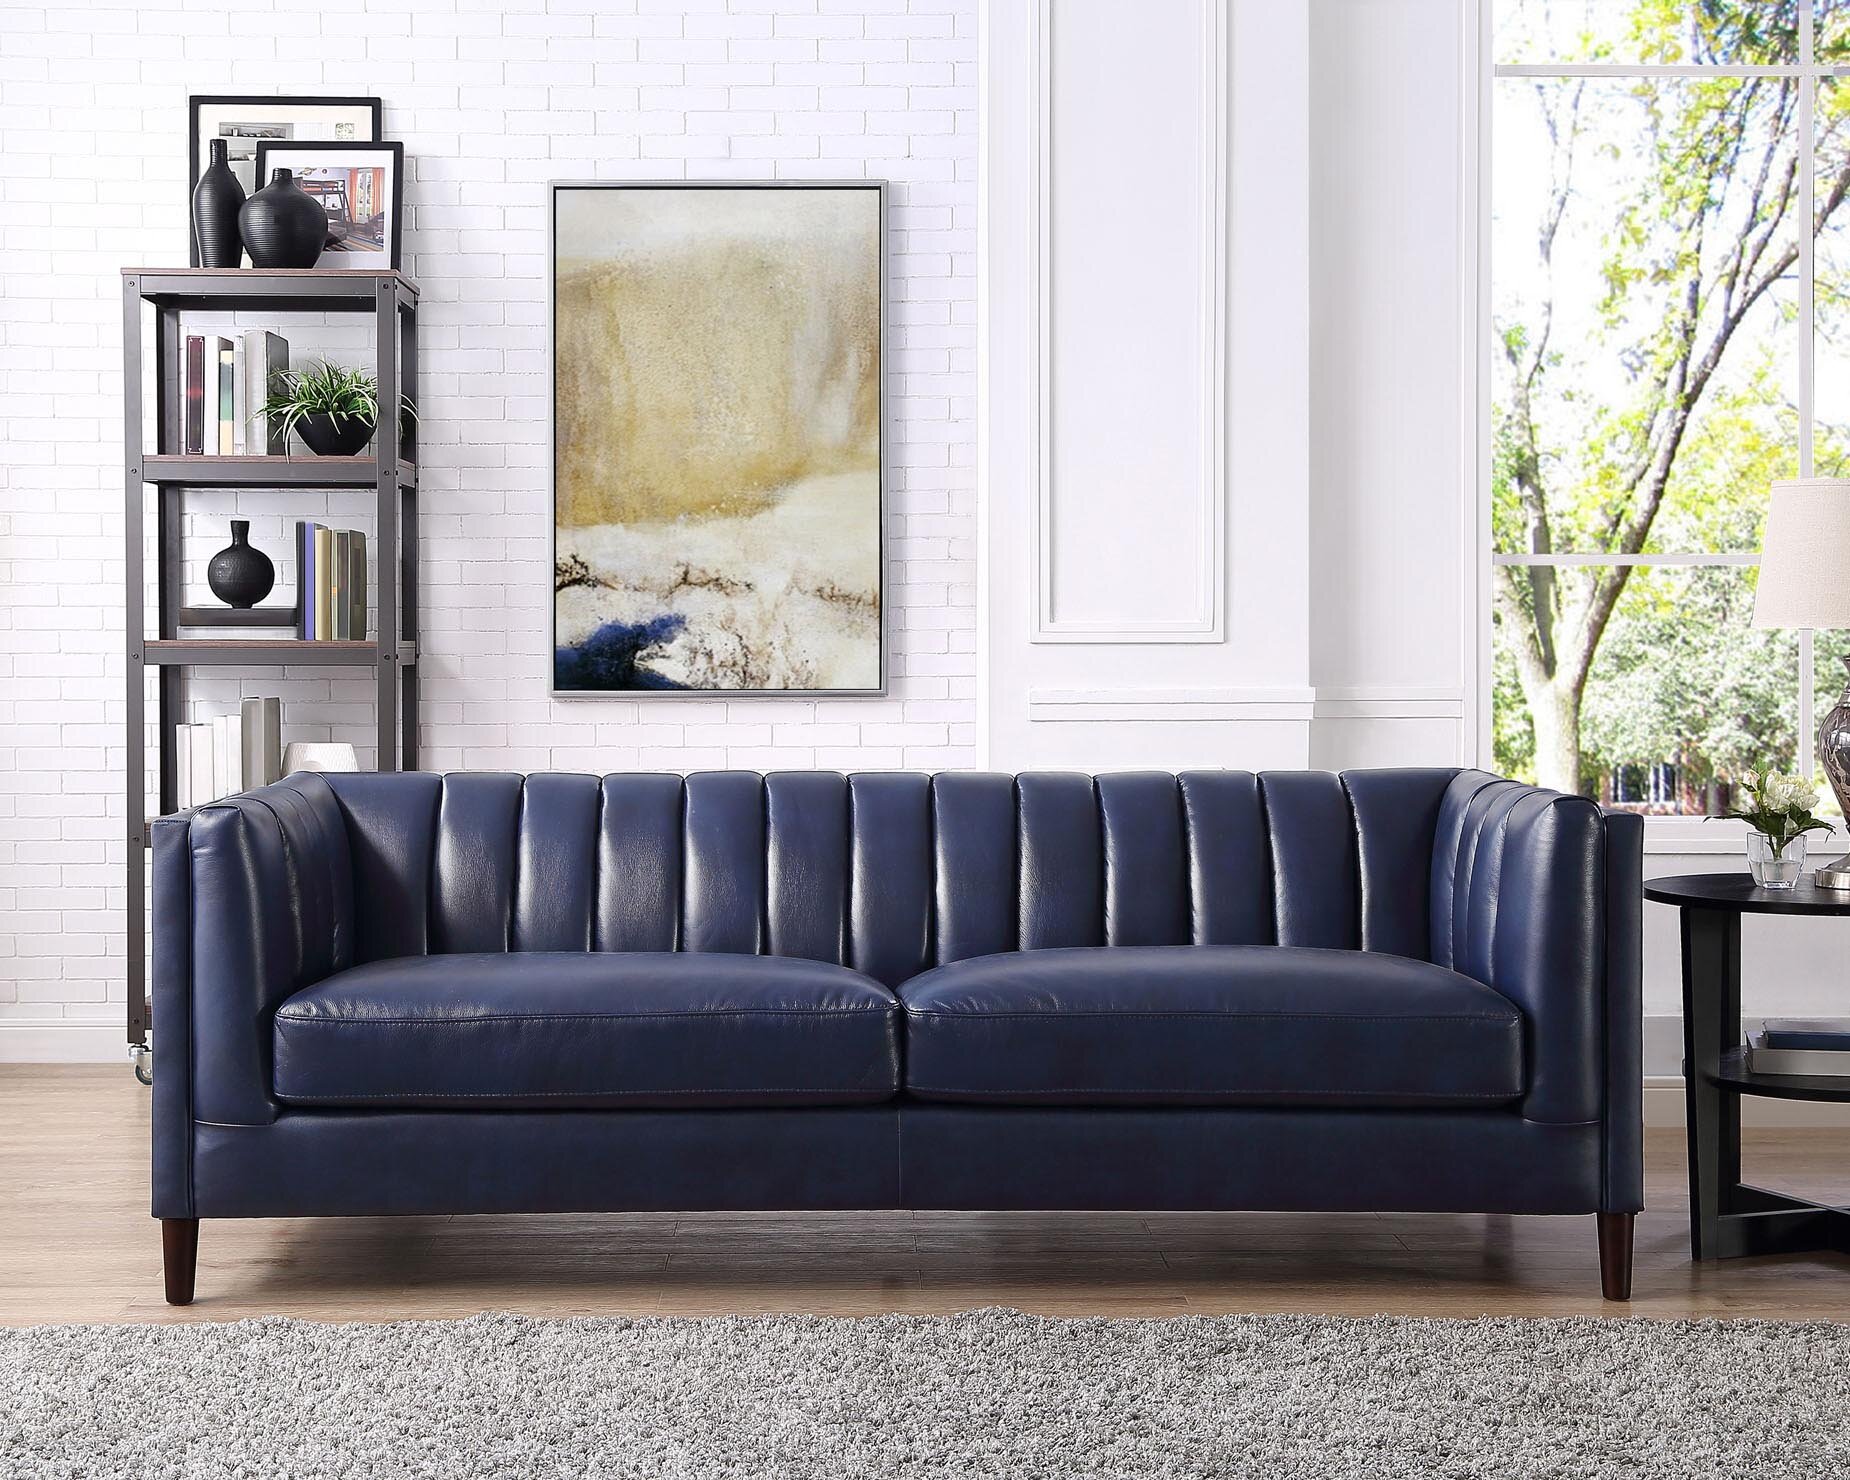 corrigan studio leather sofa